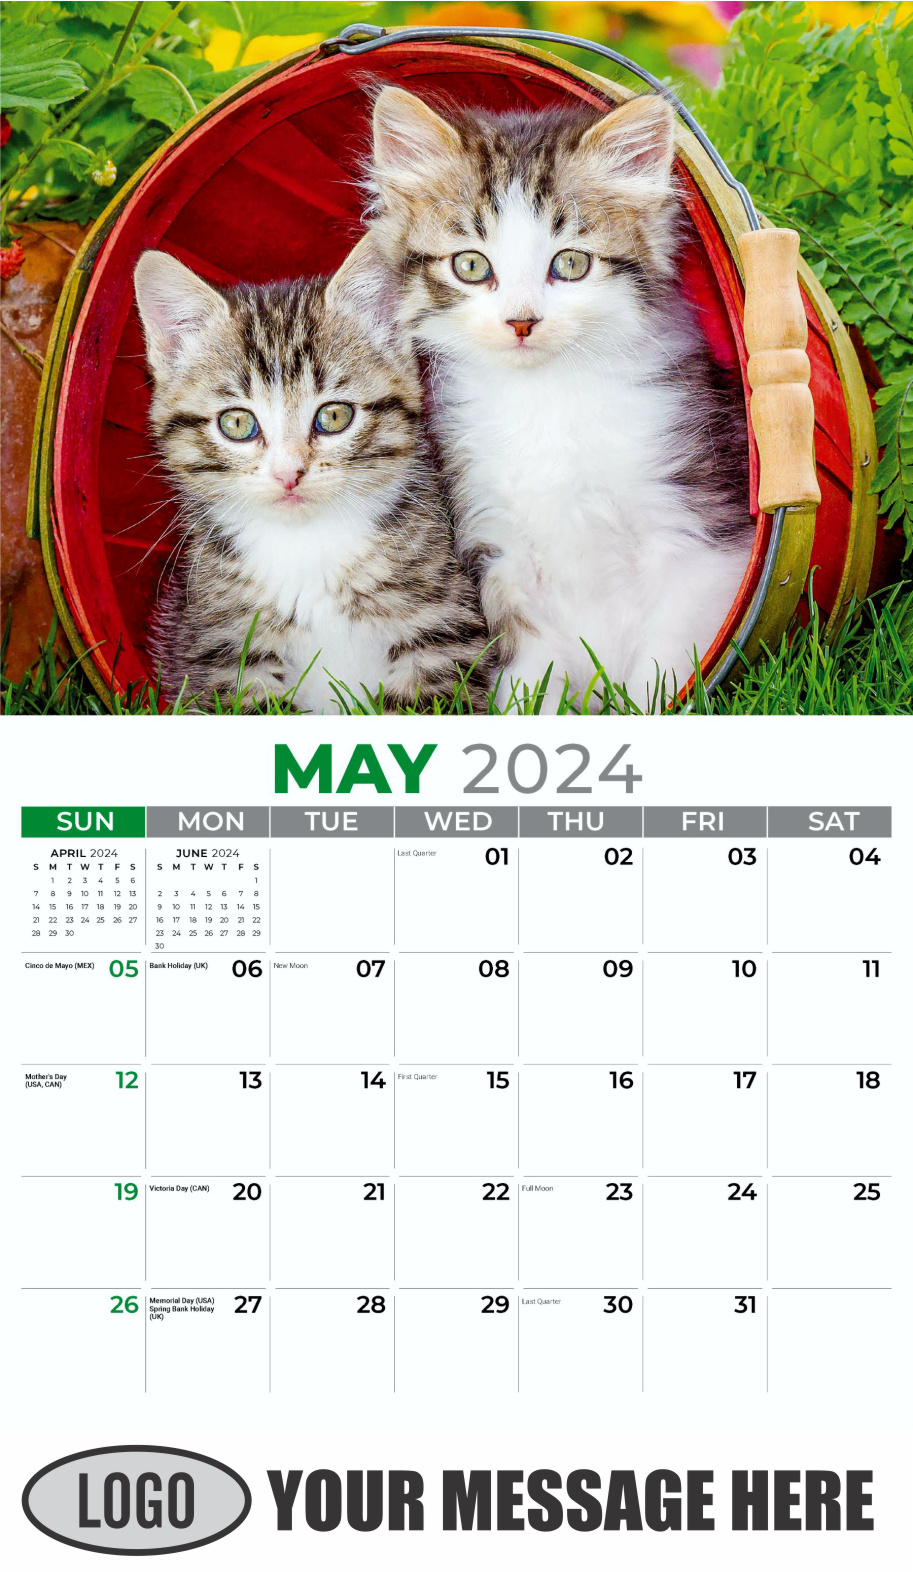 Kittens 2024 Business Promo Wall Calendar - May